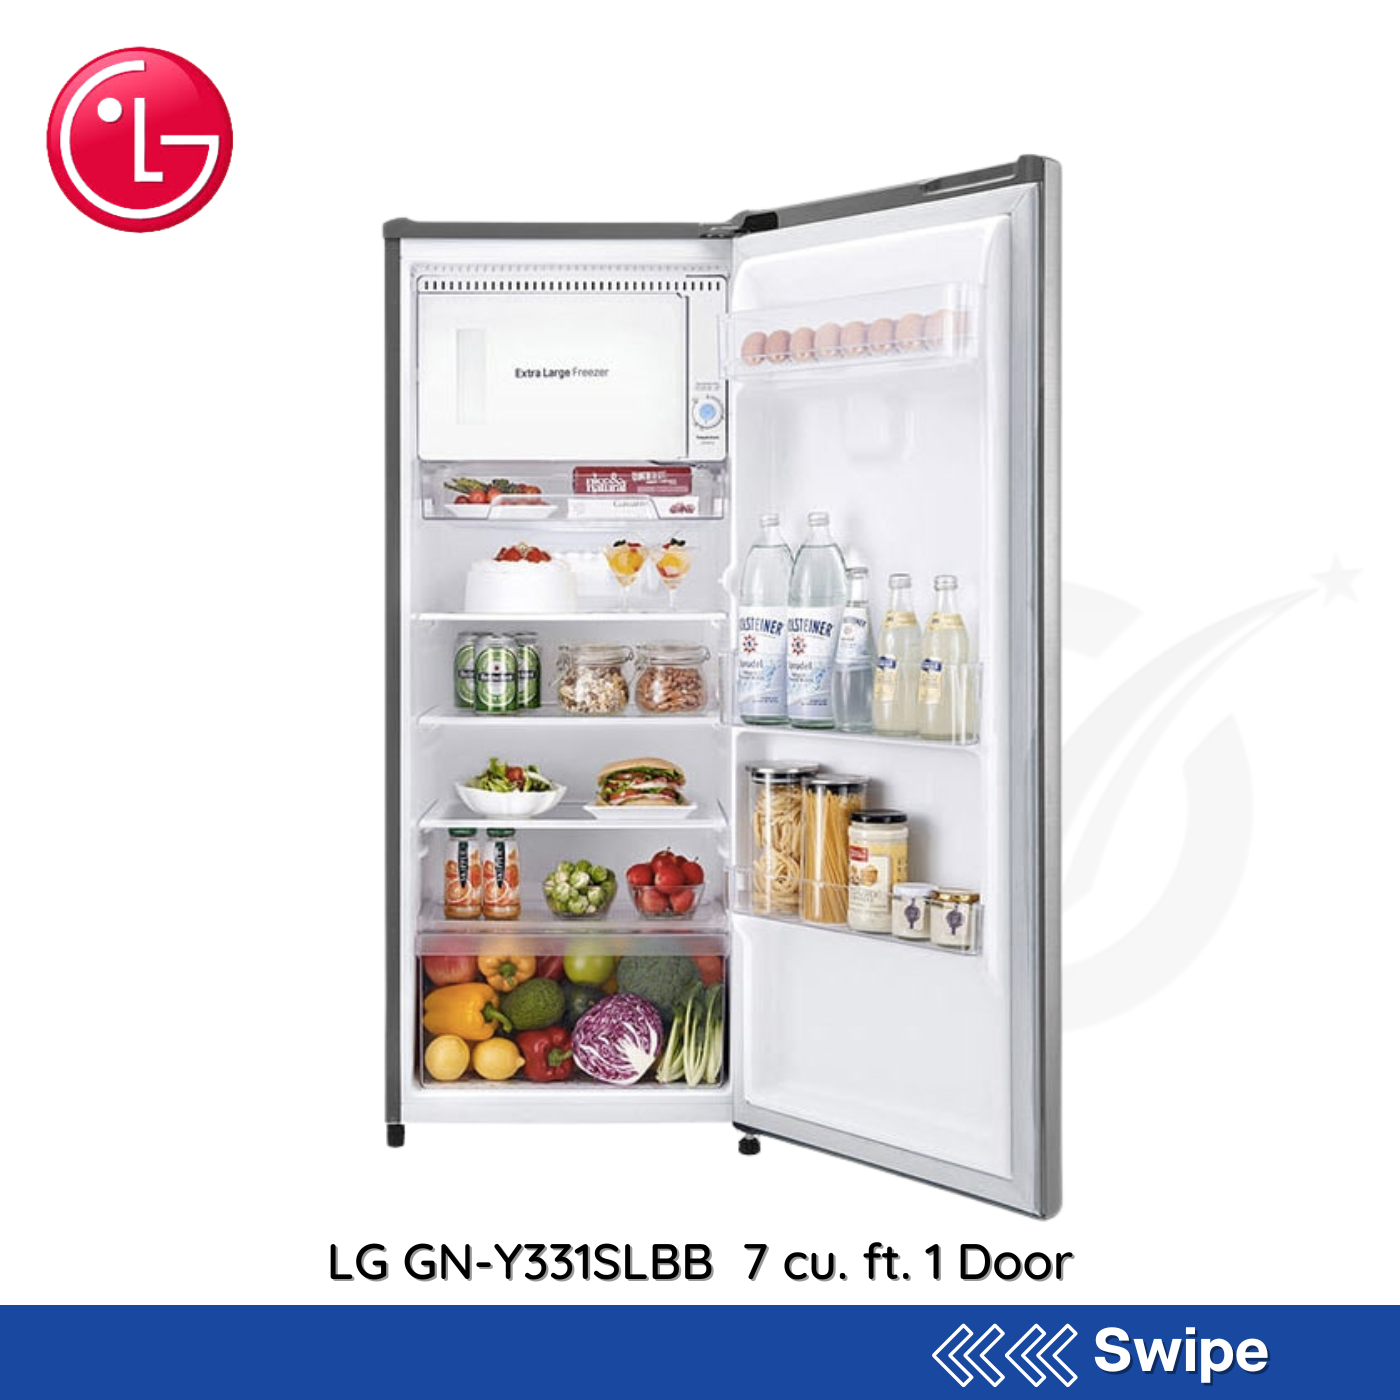 LG GN-Y331SLBB  7 cu. ft. 1 Door - People's Choice Marketing